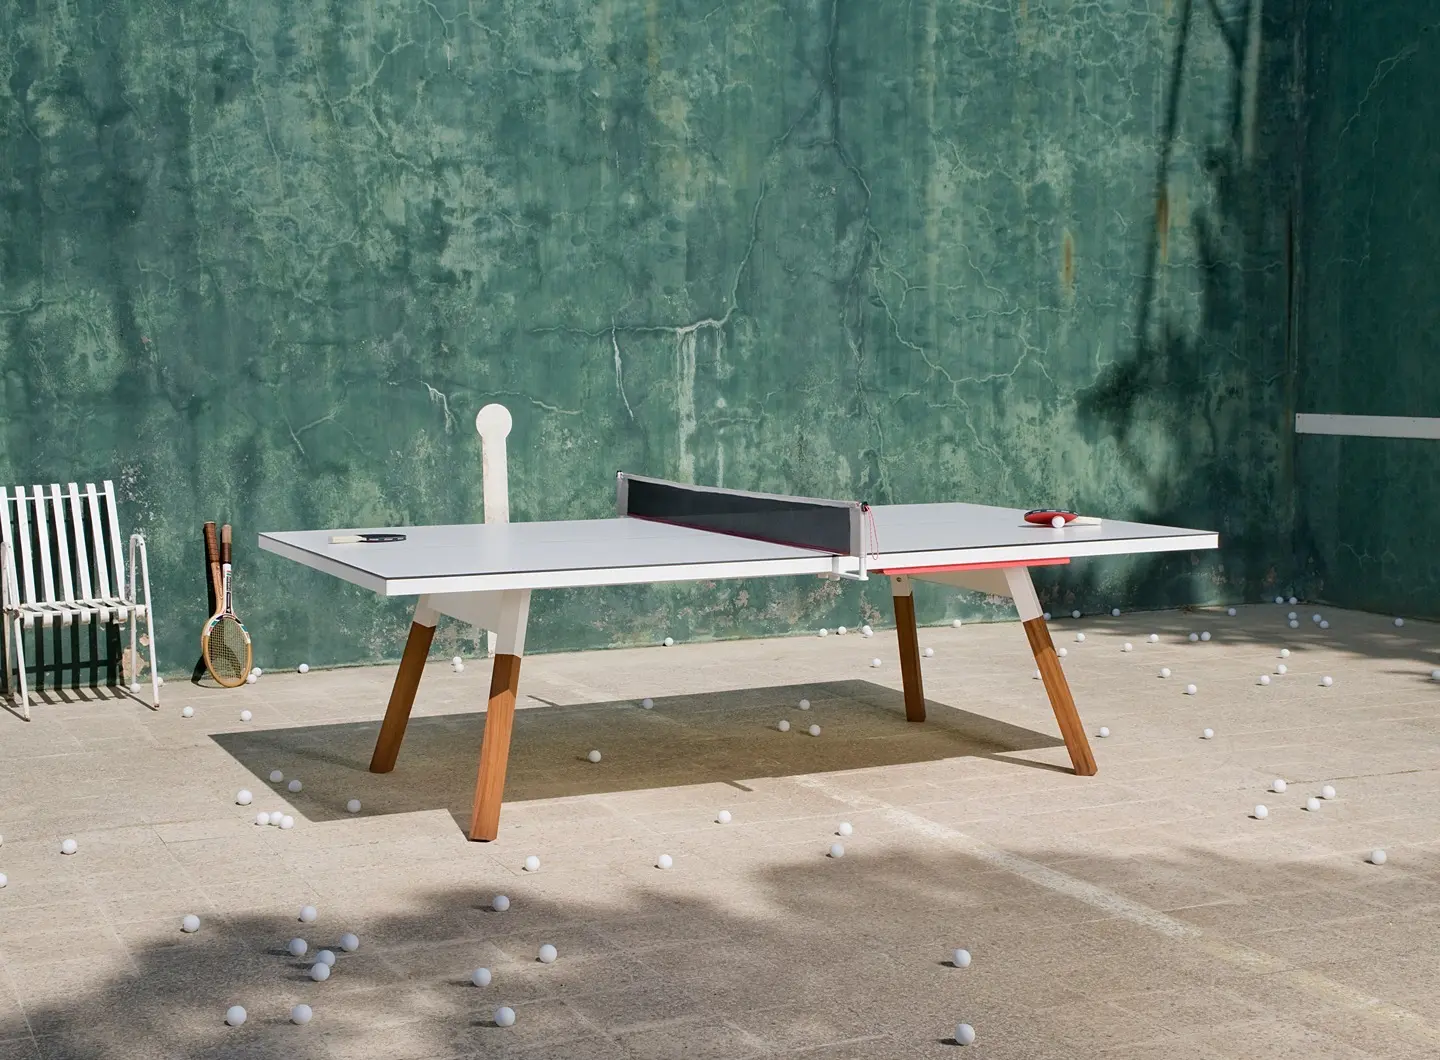 You and Me ping pong table - RS Barcelona